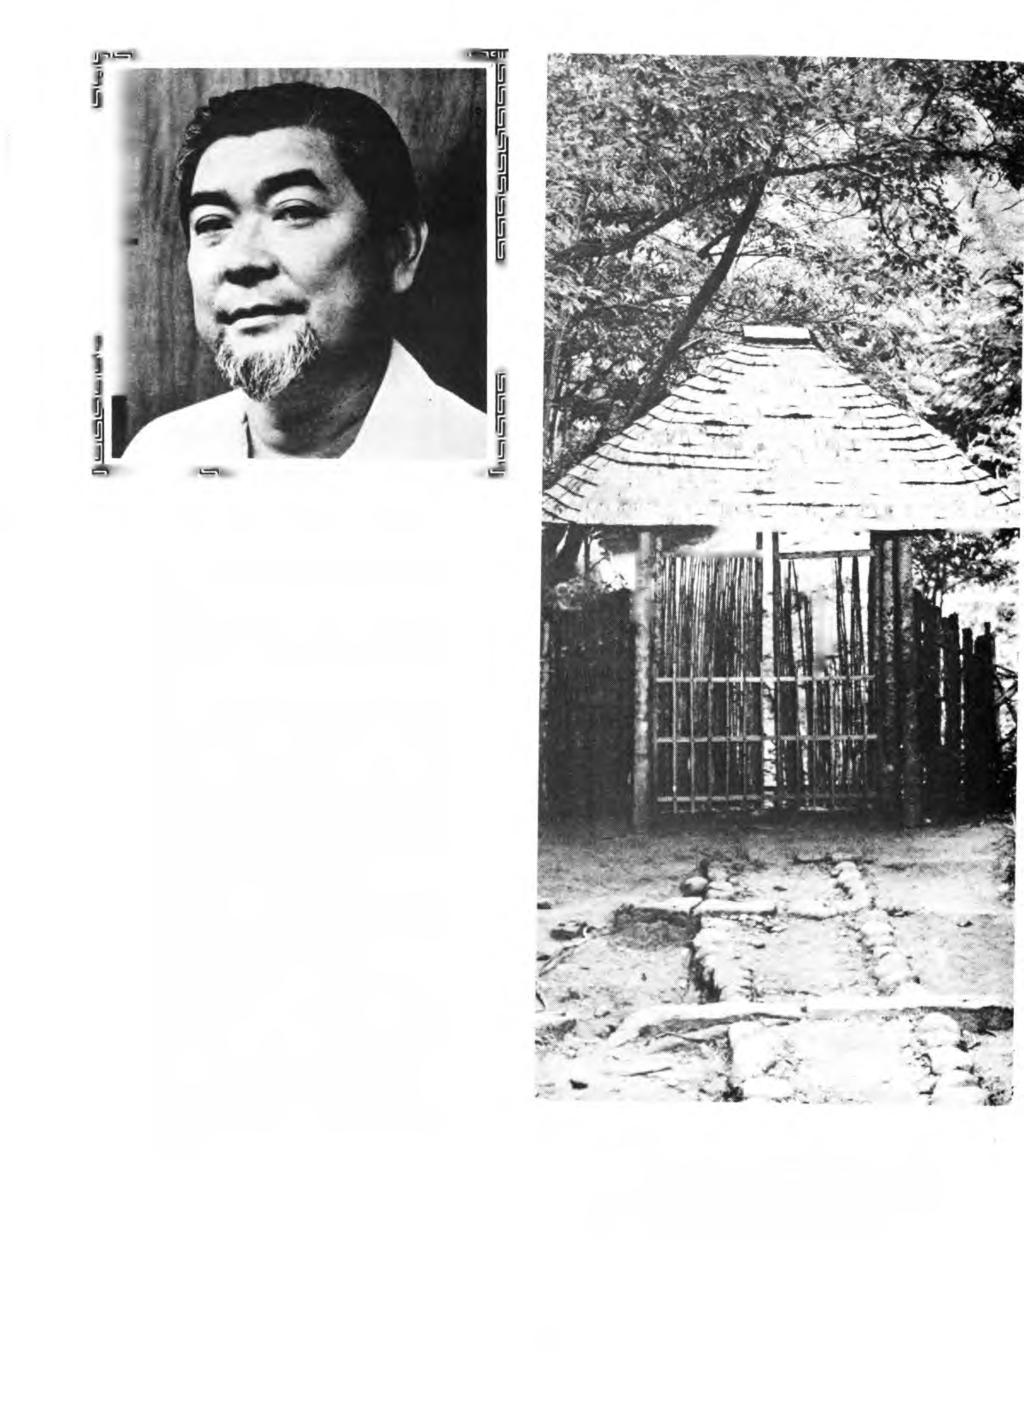 TETSURO "Rosy M AEDA Deceased Mr. Tetsuro Maeda was born in Makaweli, Kauai, on September 15, 1925.